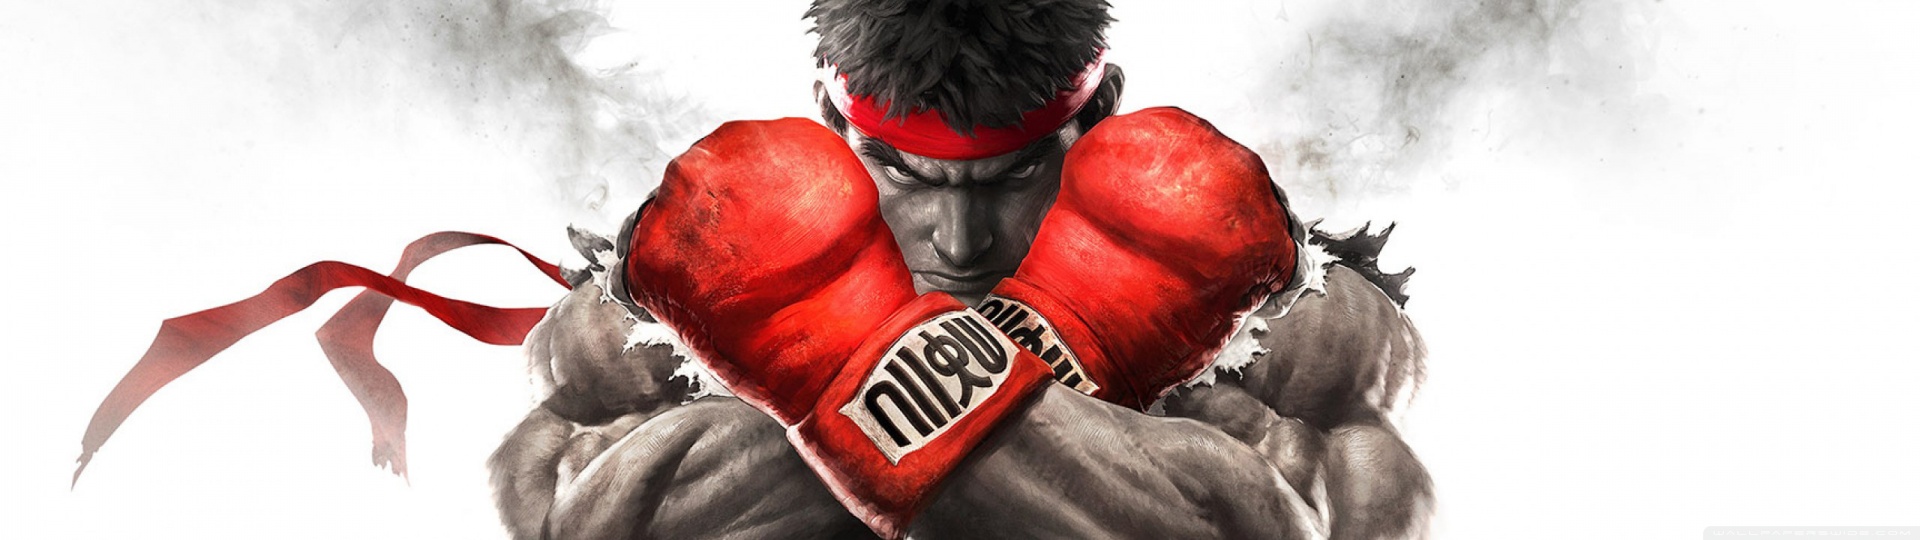 Street Fighter V 2015 HD desktop wallpaper : High Definition ...